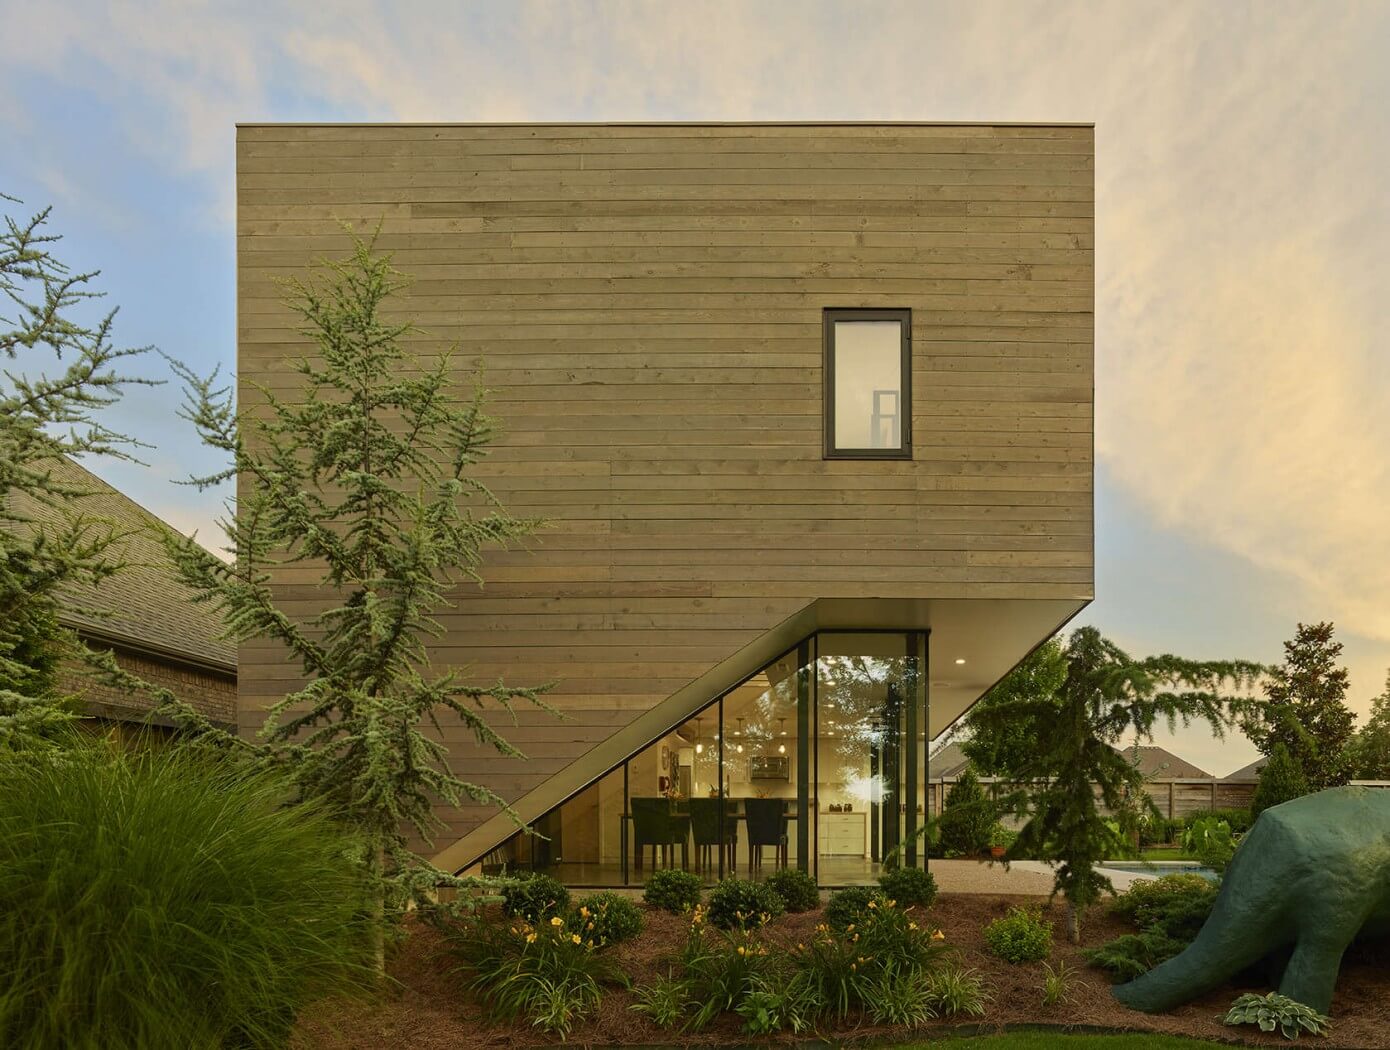 Srygley Poolhouse by Marlon Blackwell Architects